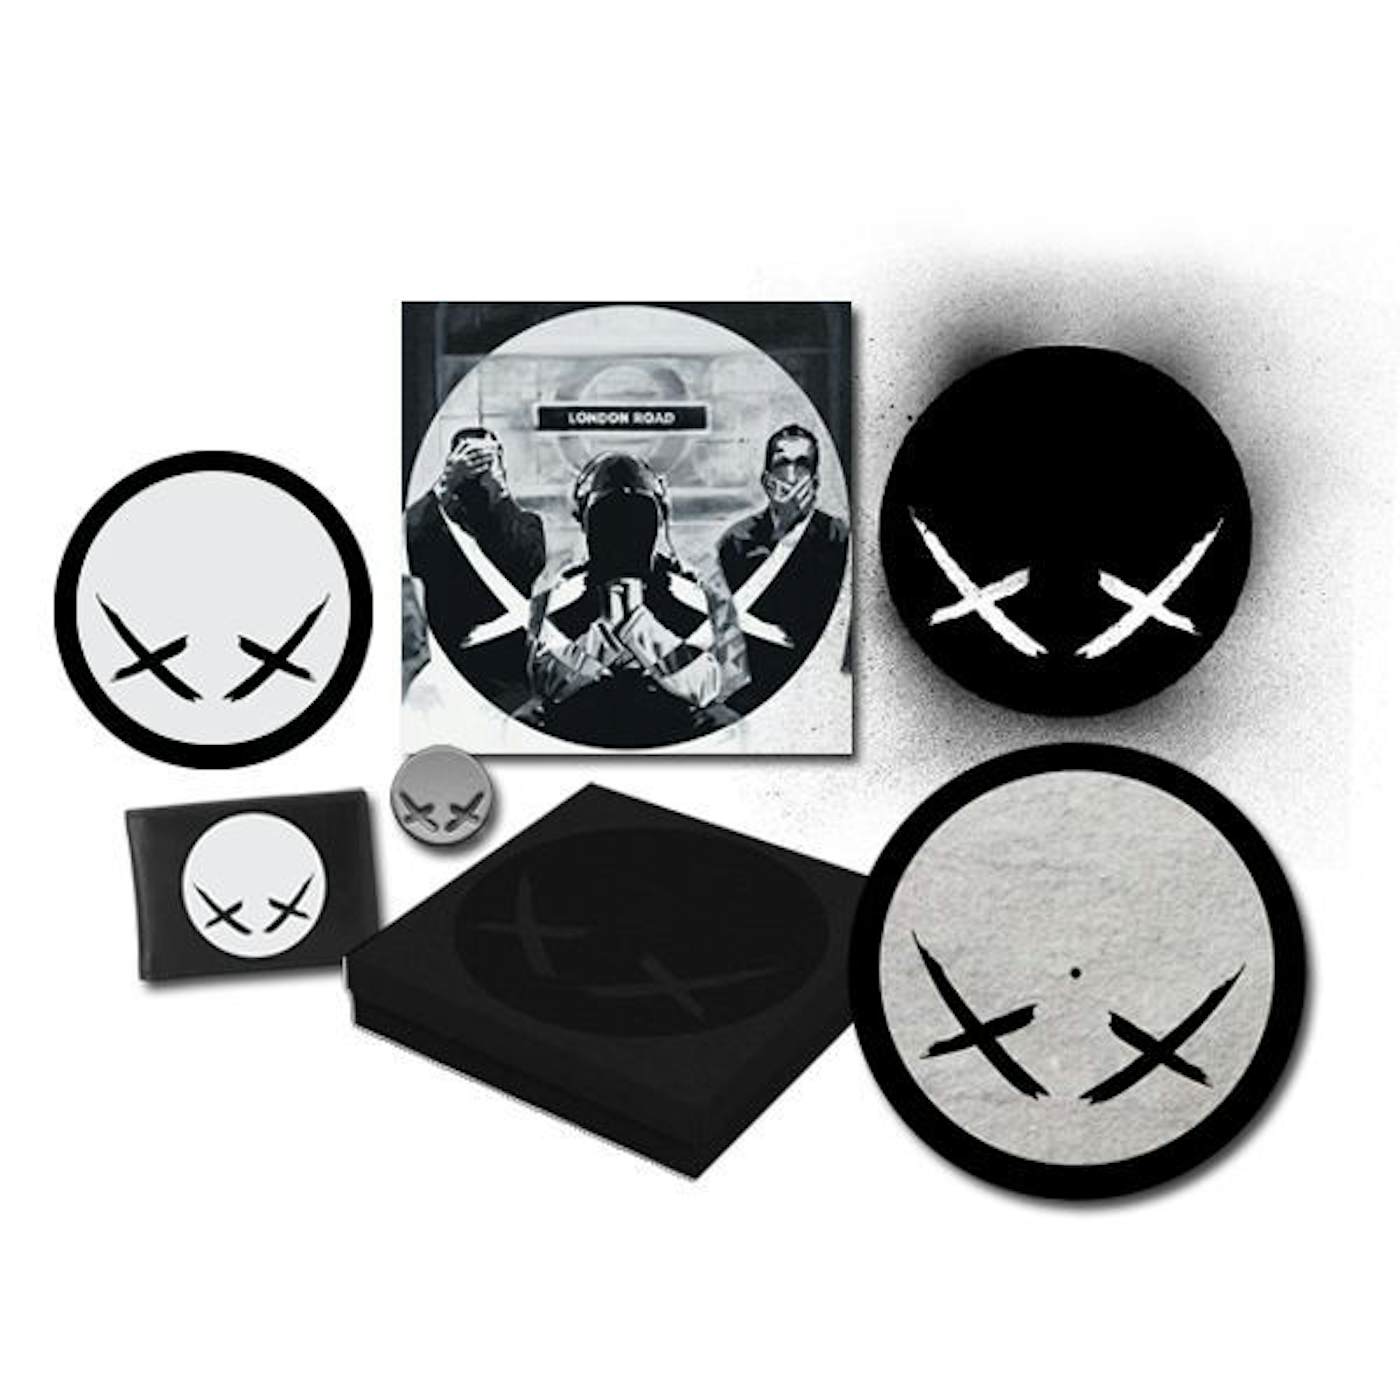 Modestep London Road Limited Edition CD Box Set 